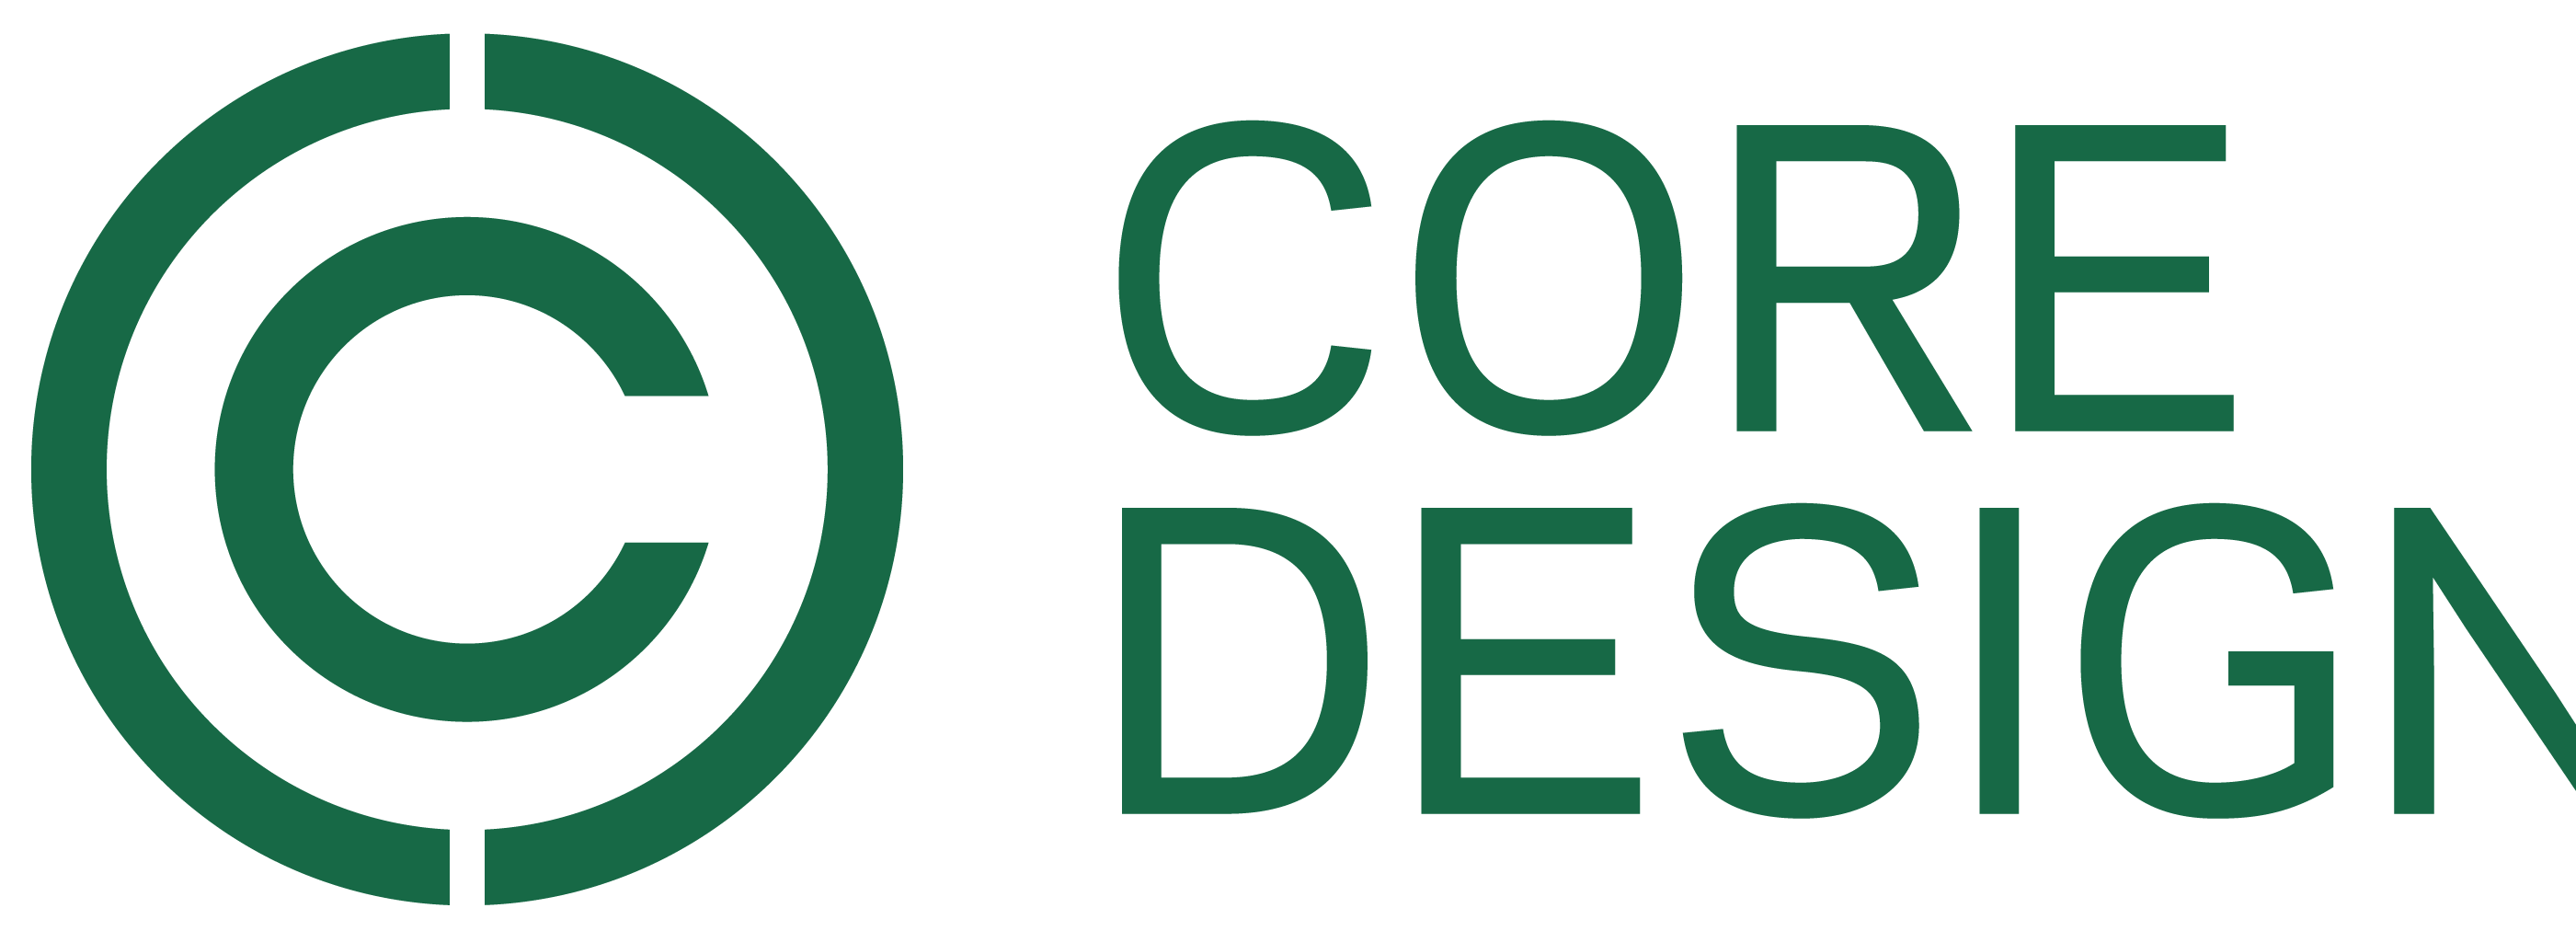 Coredesign